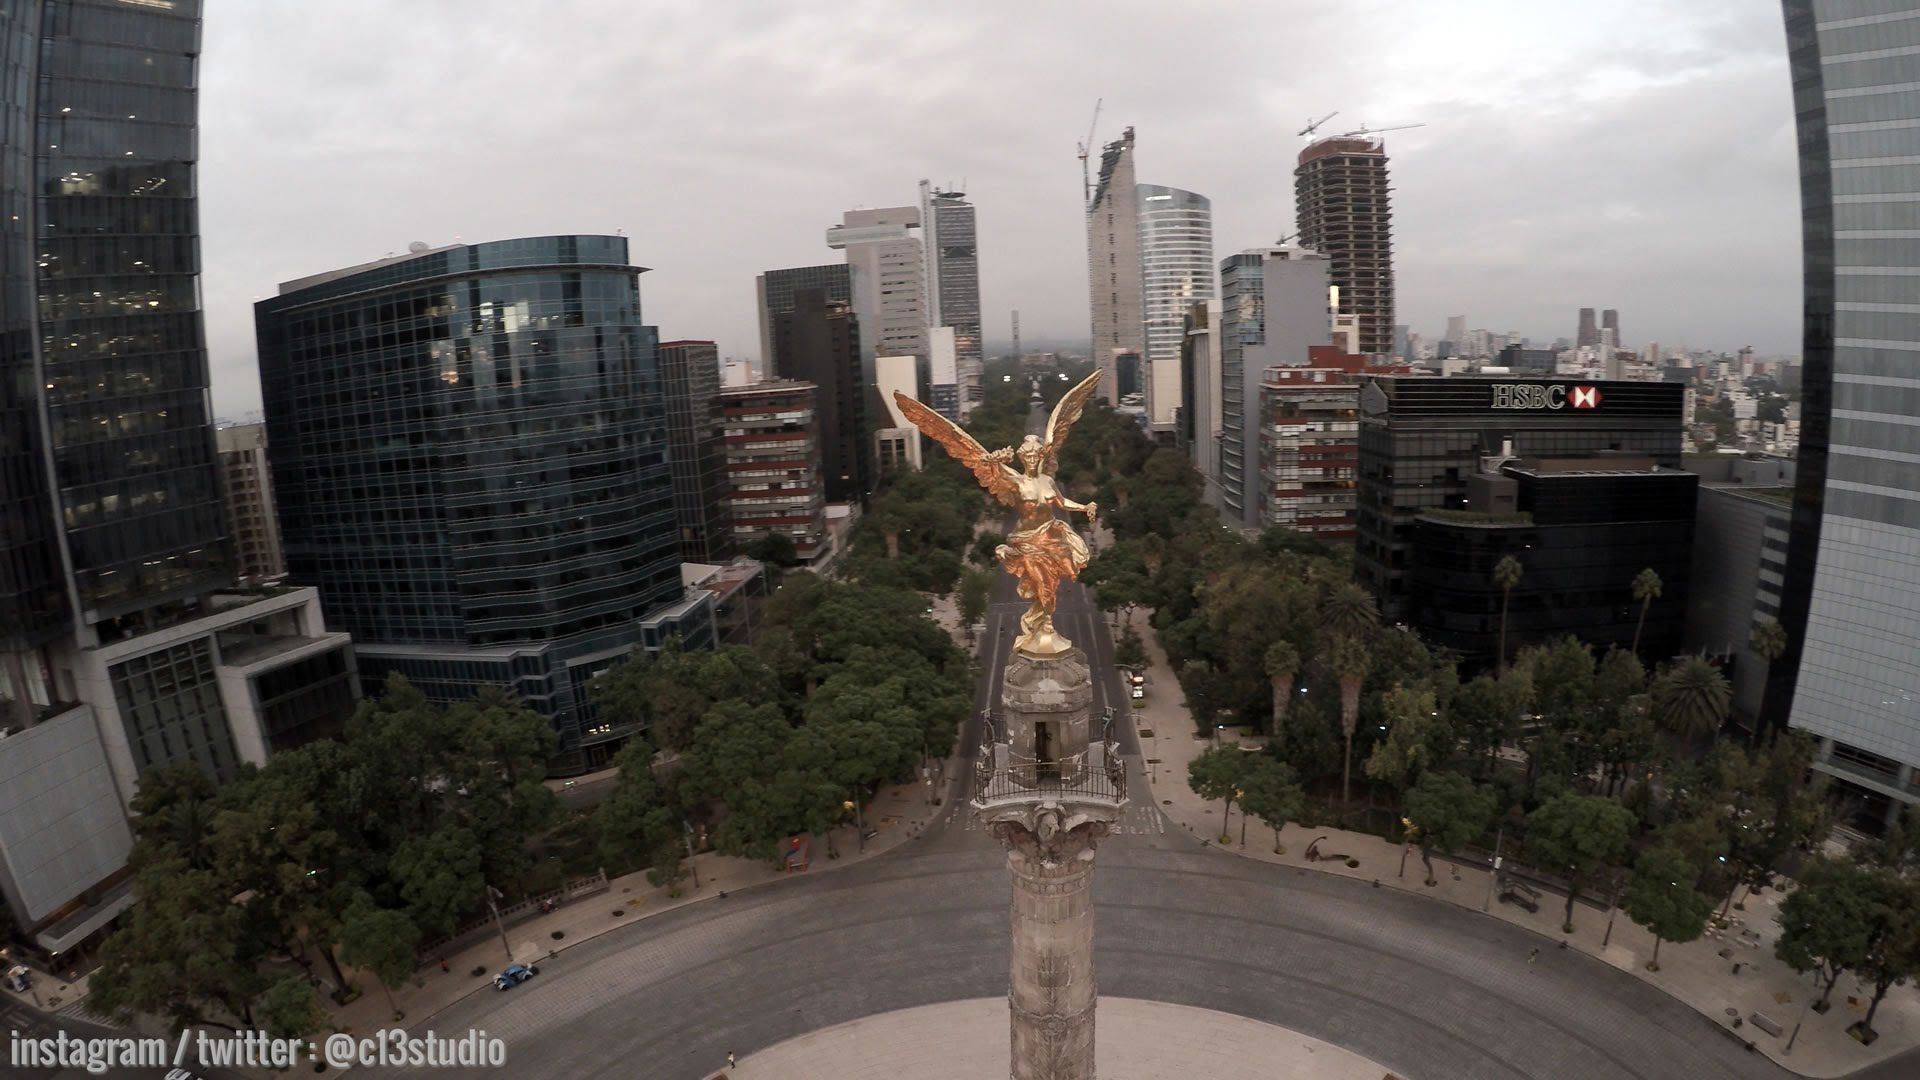 Ciudad de México, México